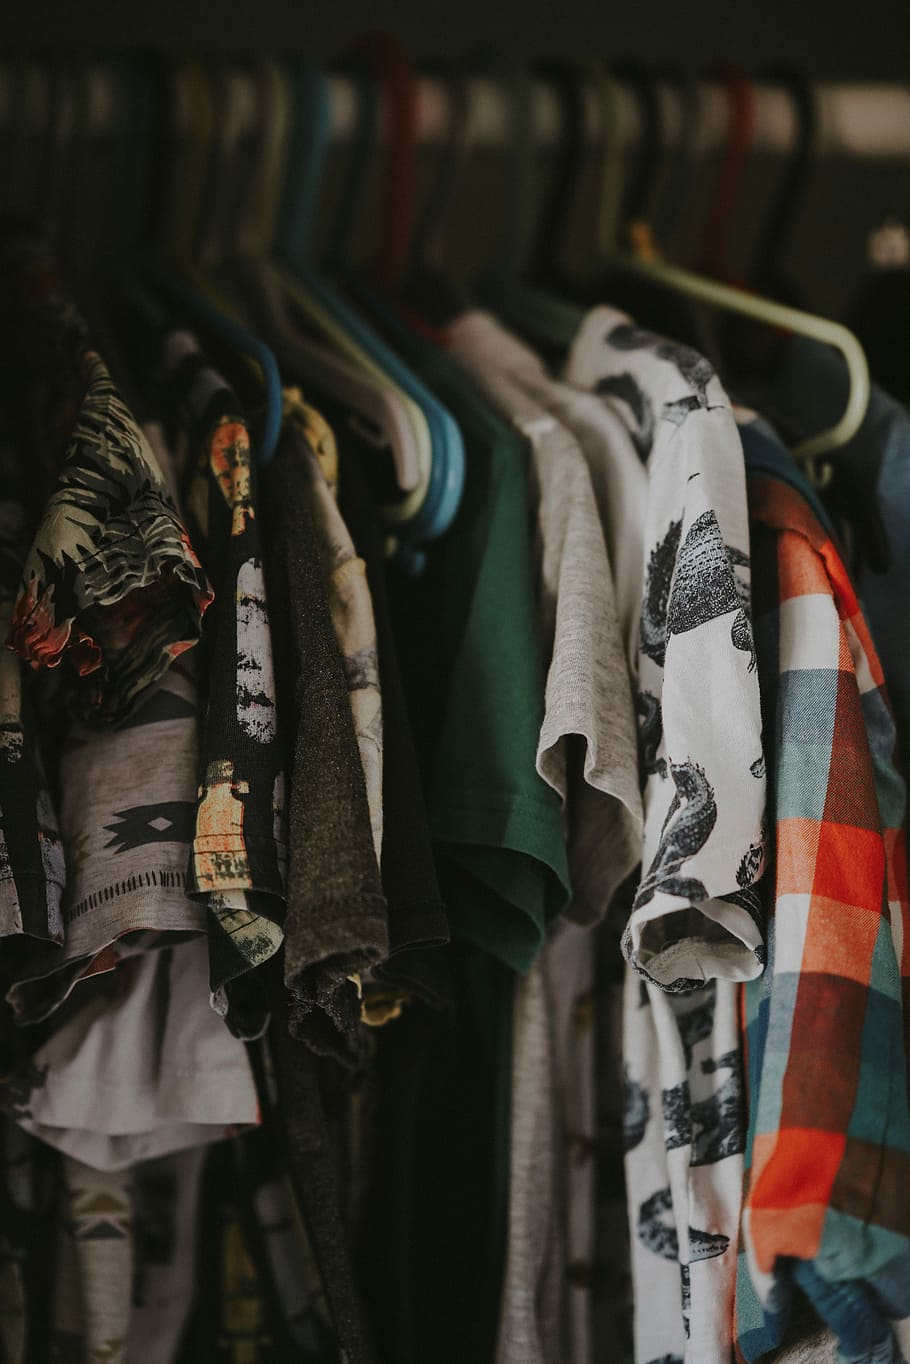 Boys clothing hanging in a wardrobe / closet, assorted T-shirt lot, HD wallpaper